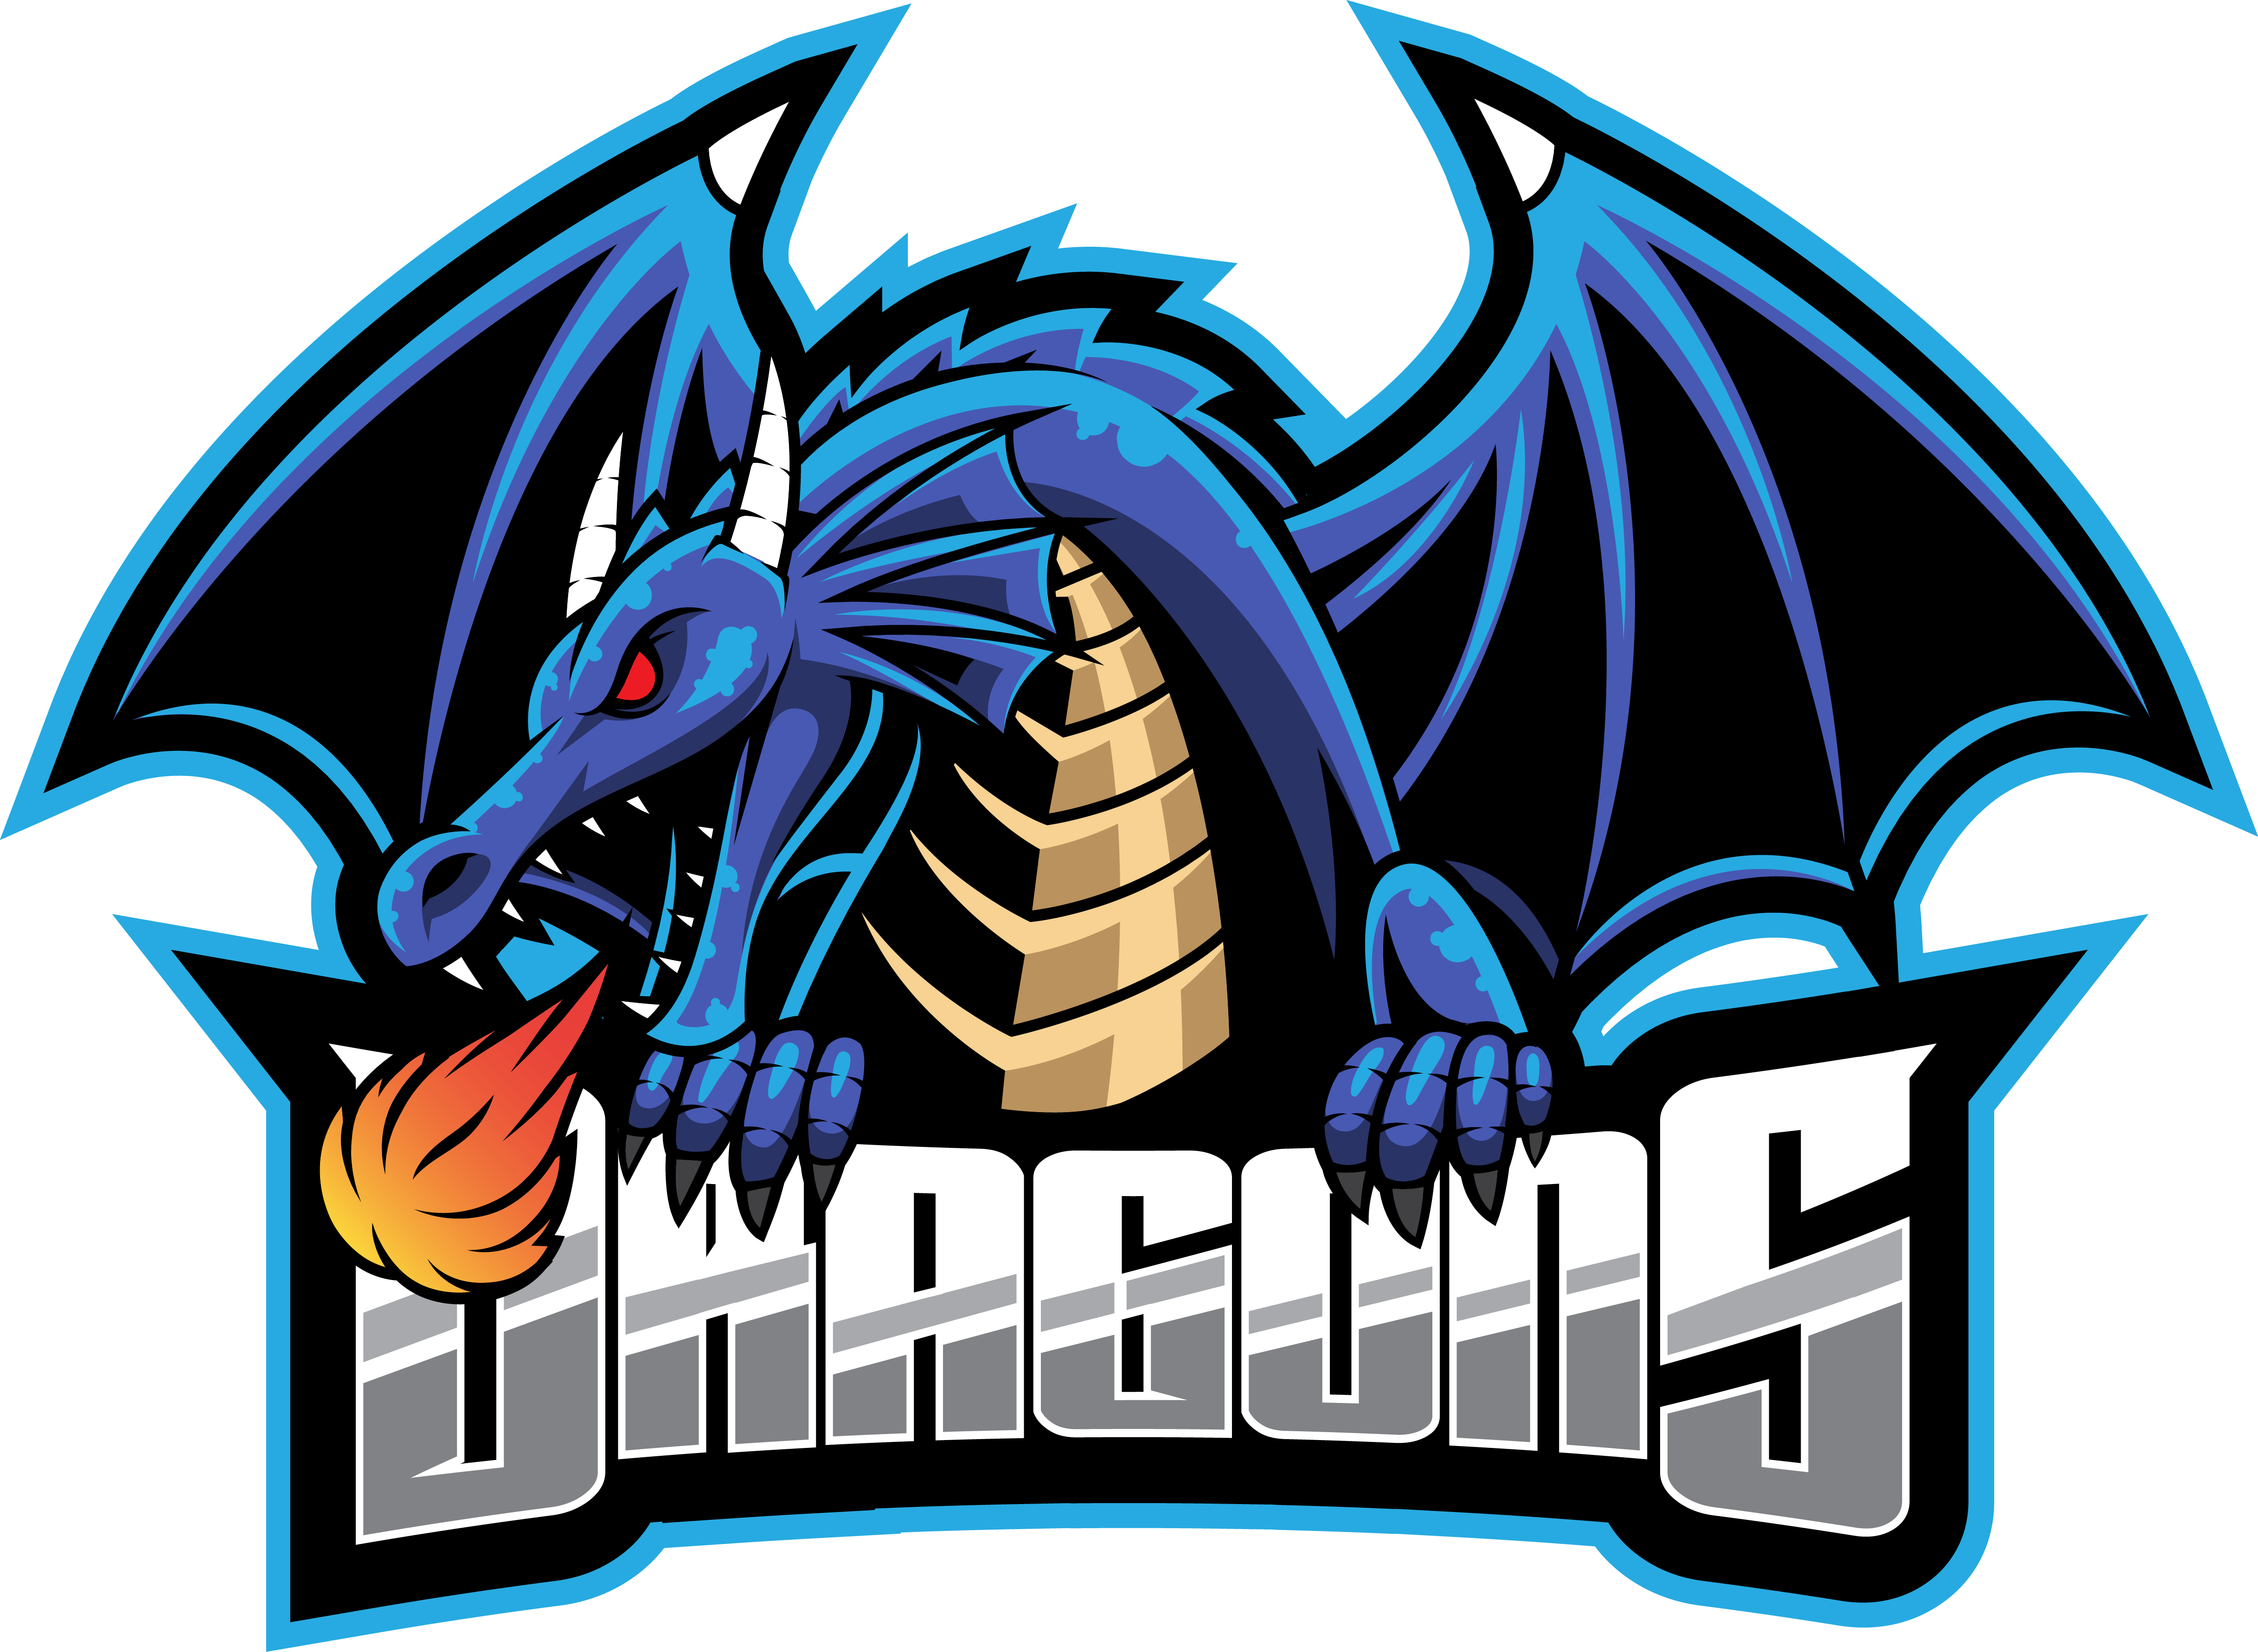 Dragon Esport Mascot Logo Design By Visink Thehungryjpeg